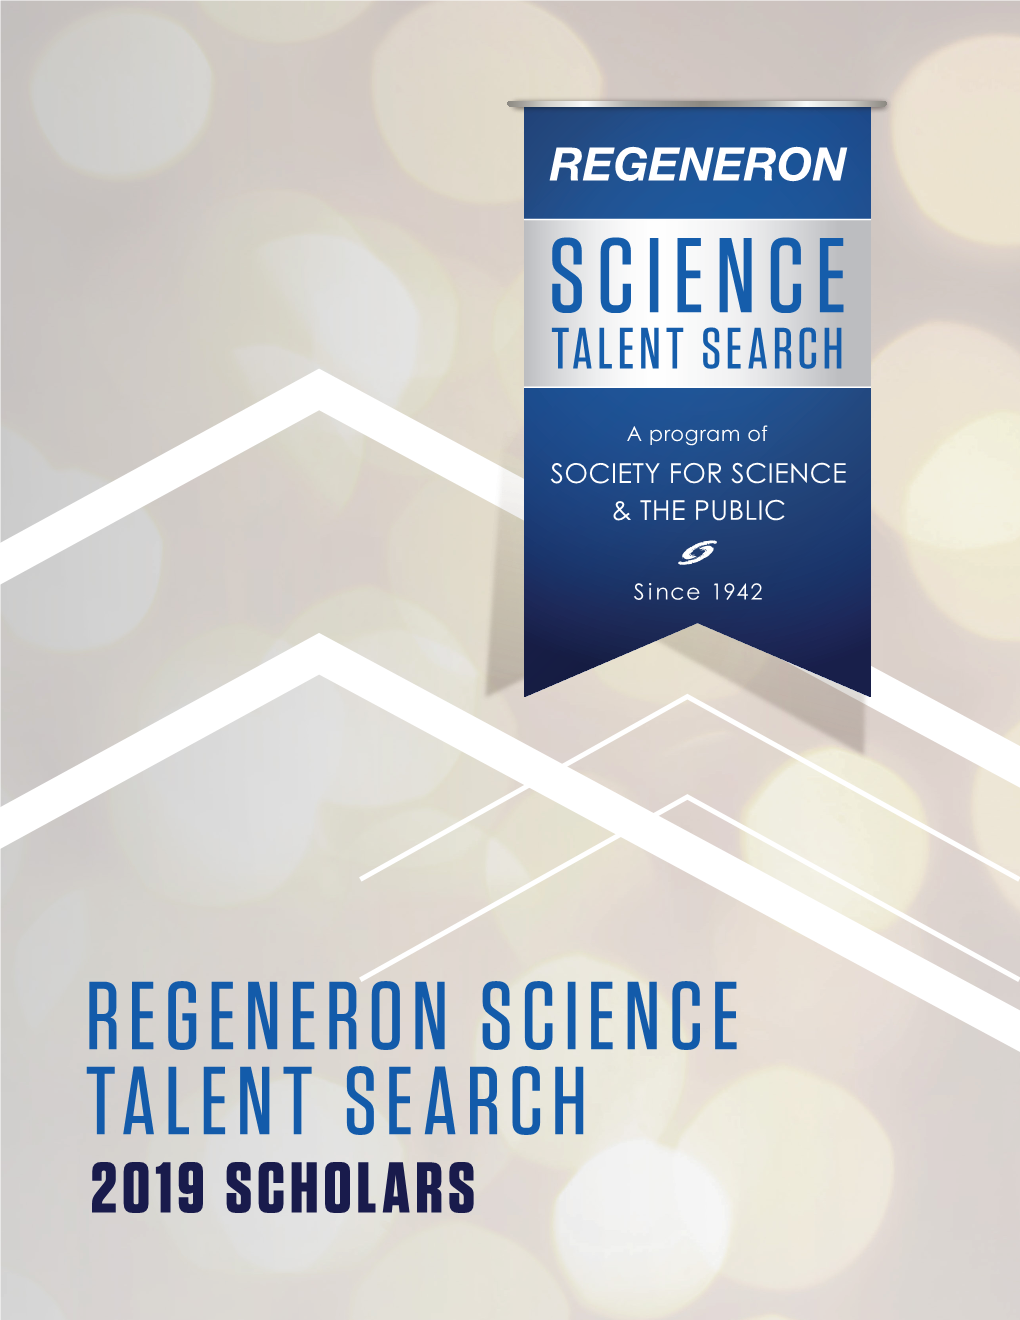 Regeneron Science Talent Search 2019 Scholars 2019 Scholars